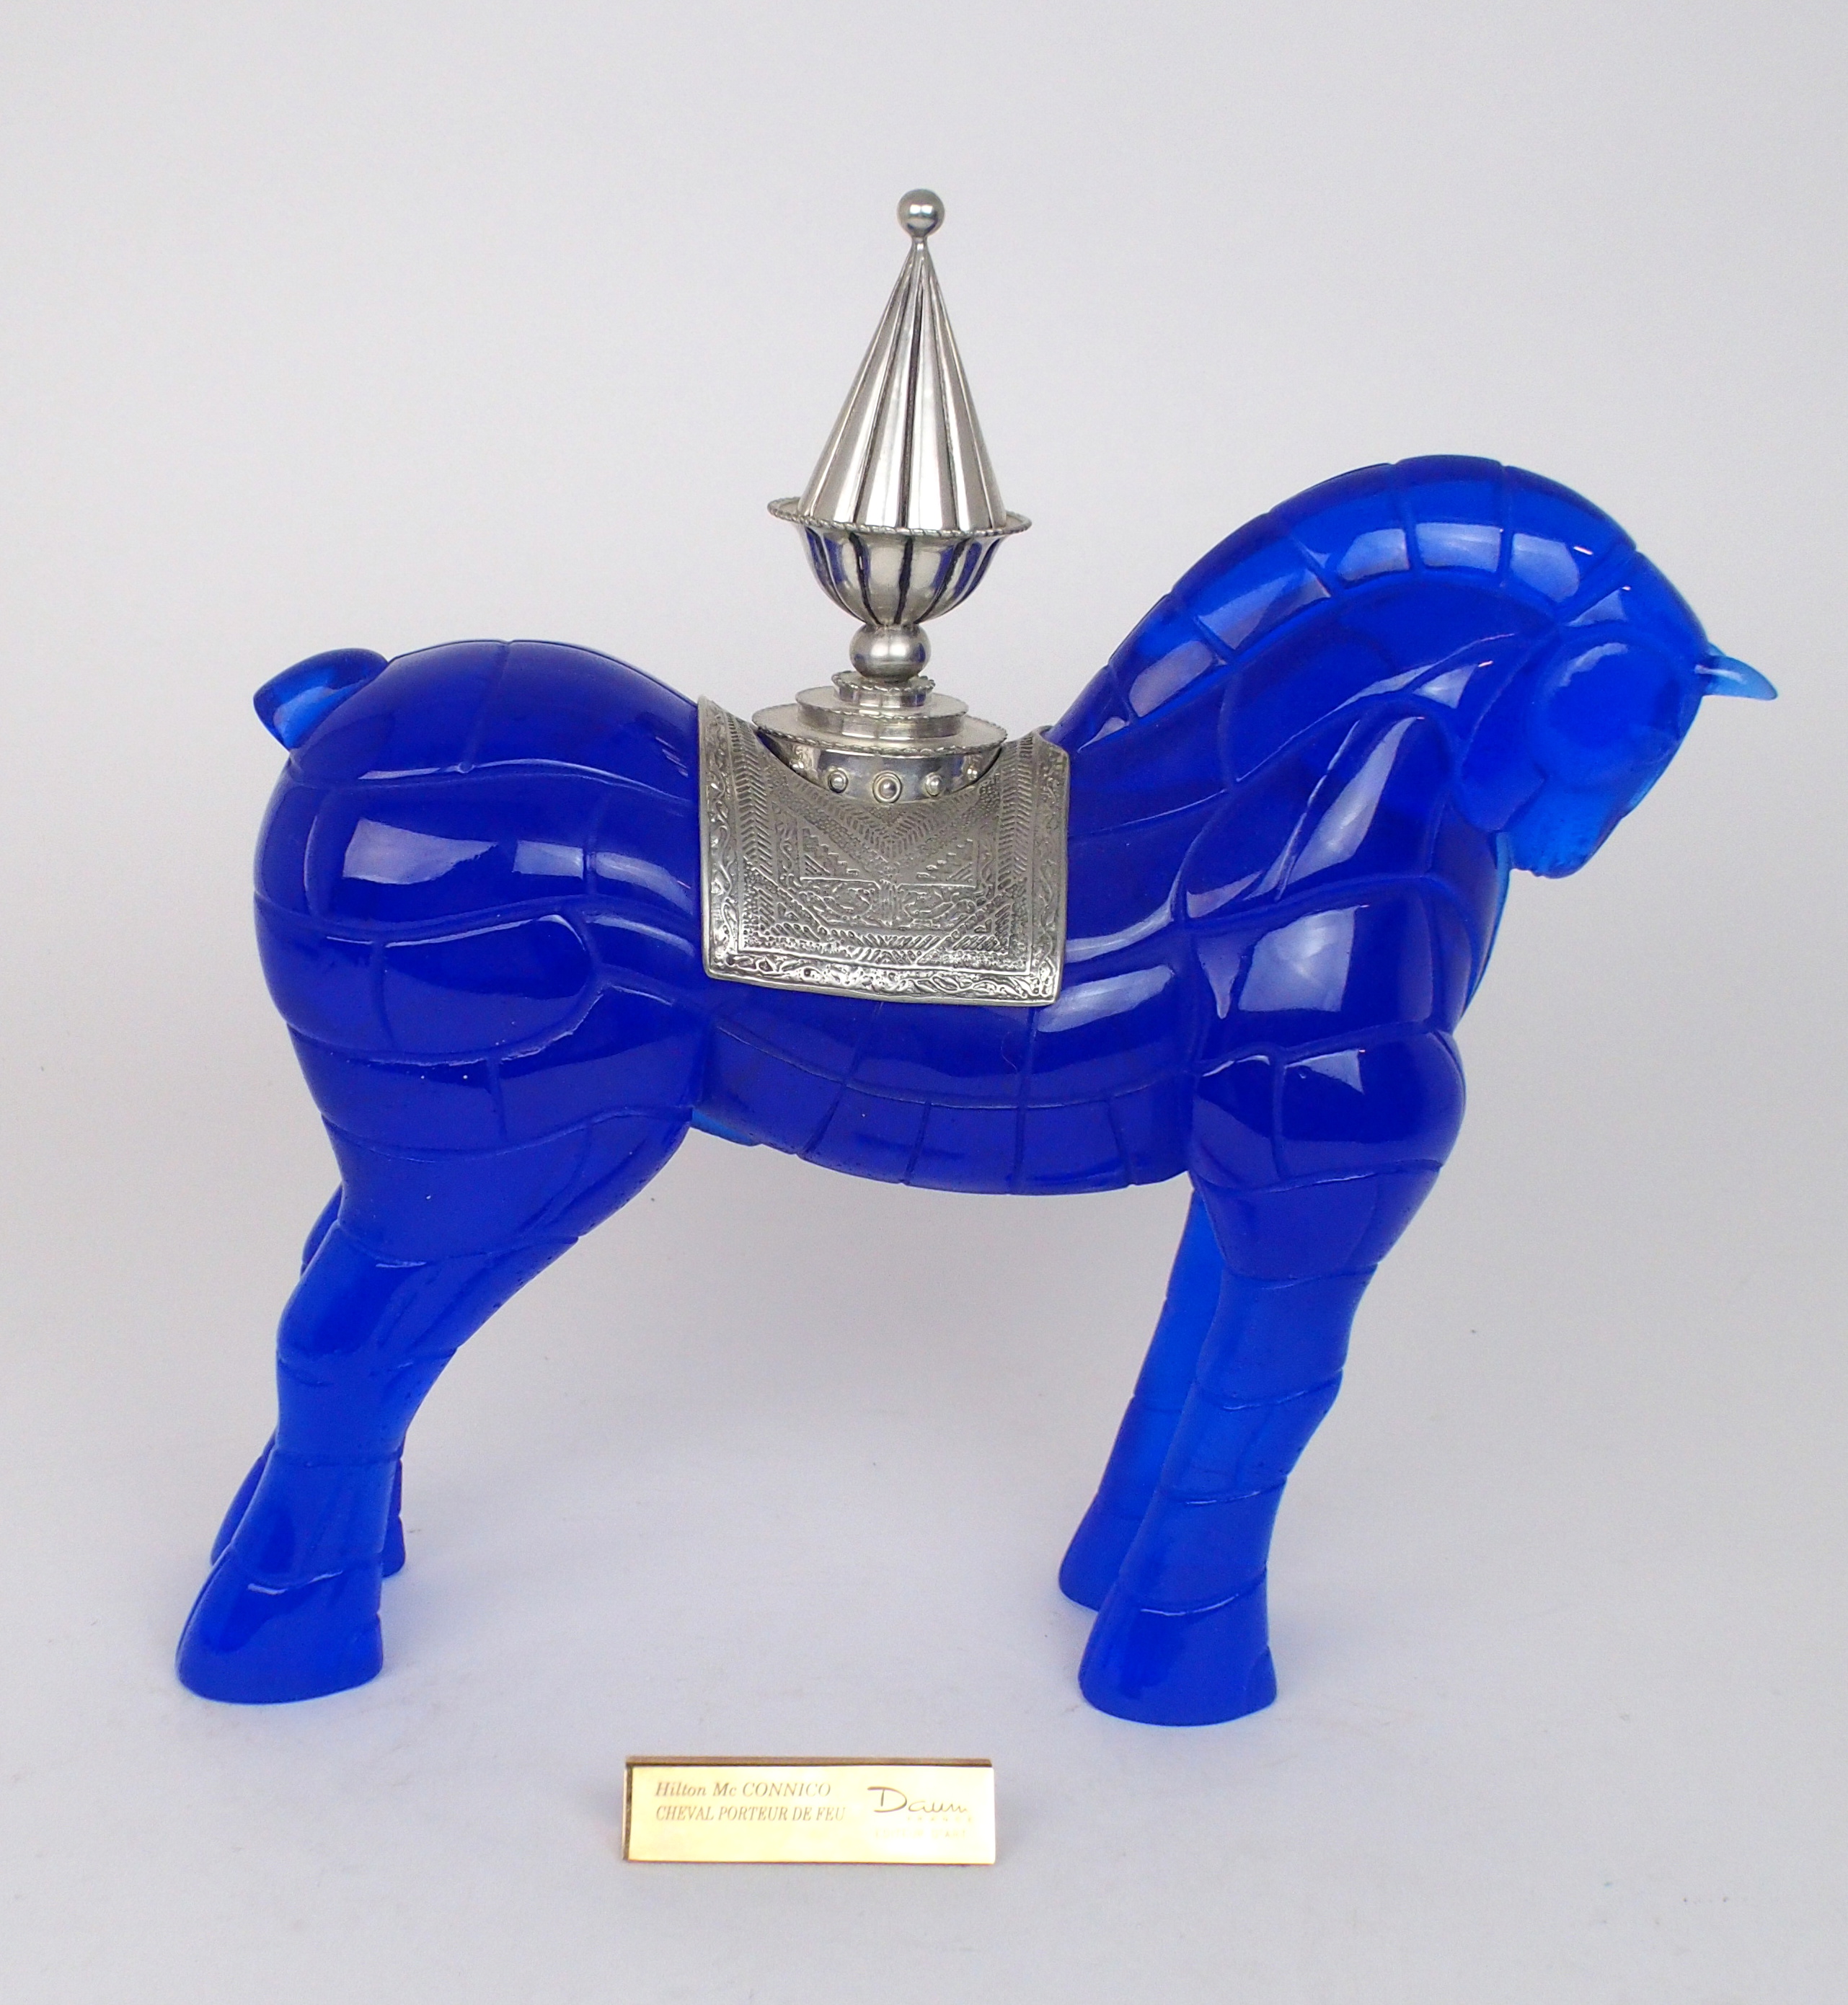 A LIMITED EDITION DAUM MODEL OF A HORSE 'CHEVAL PORTEUR DE FEU' designed by Hilton McConnico, no